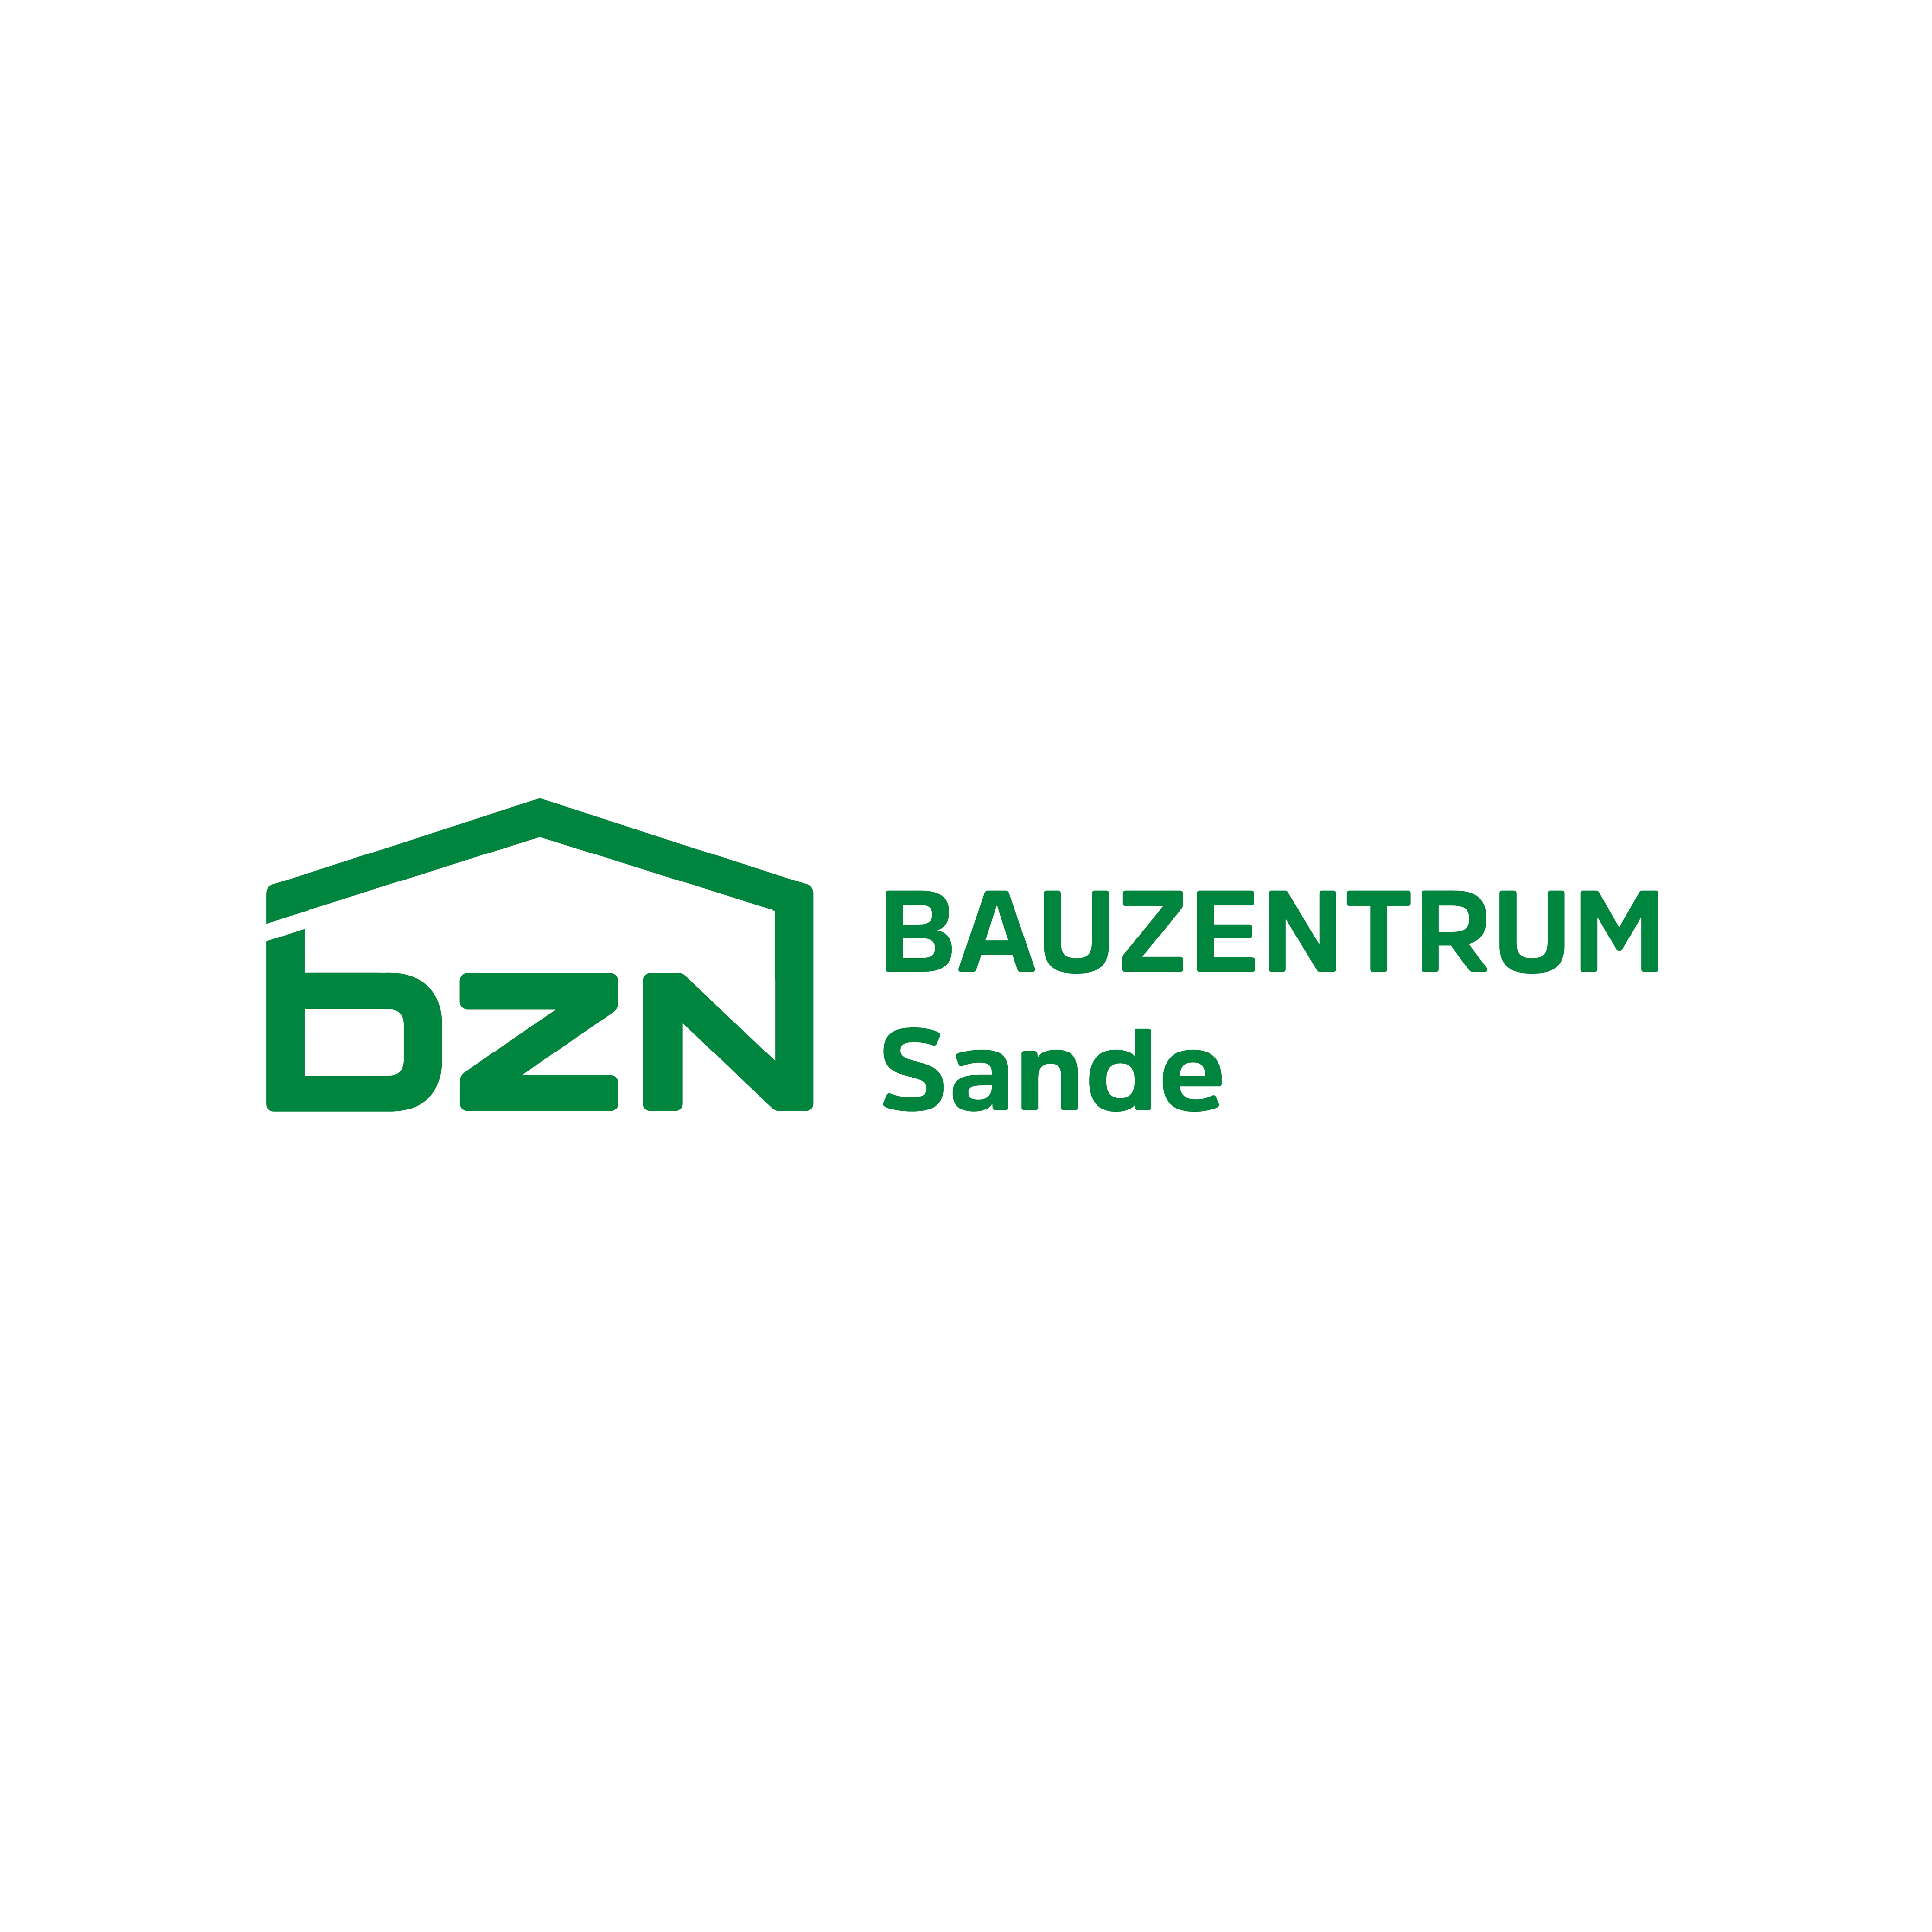 BZN Bauzentrum Sande GmbH & Co. KG in Sande Kreis Friesland - Logo